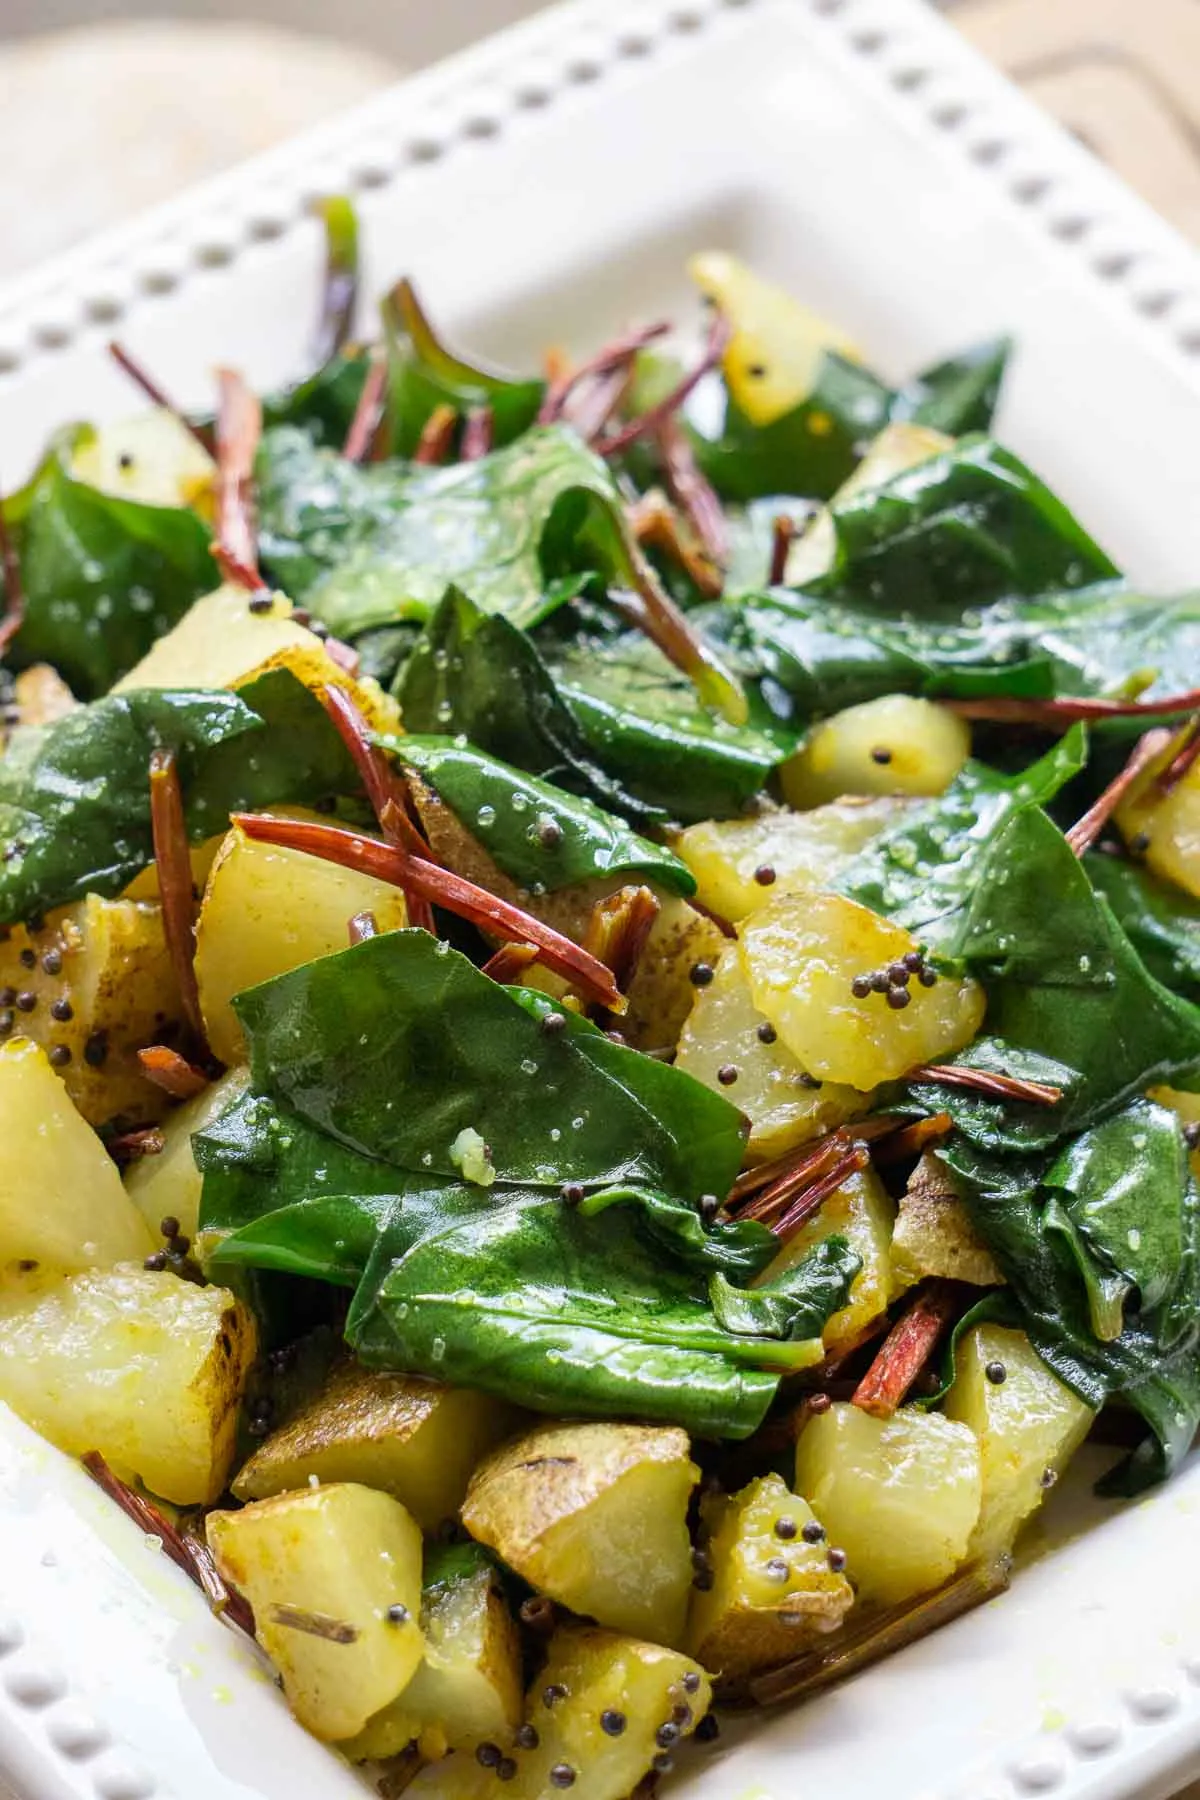 Malabar Spinach and Potato Stir Fry